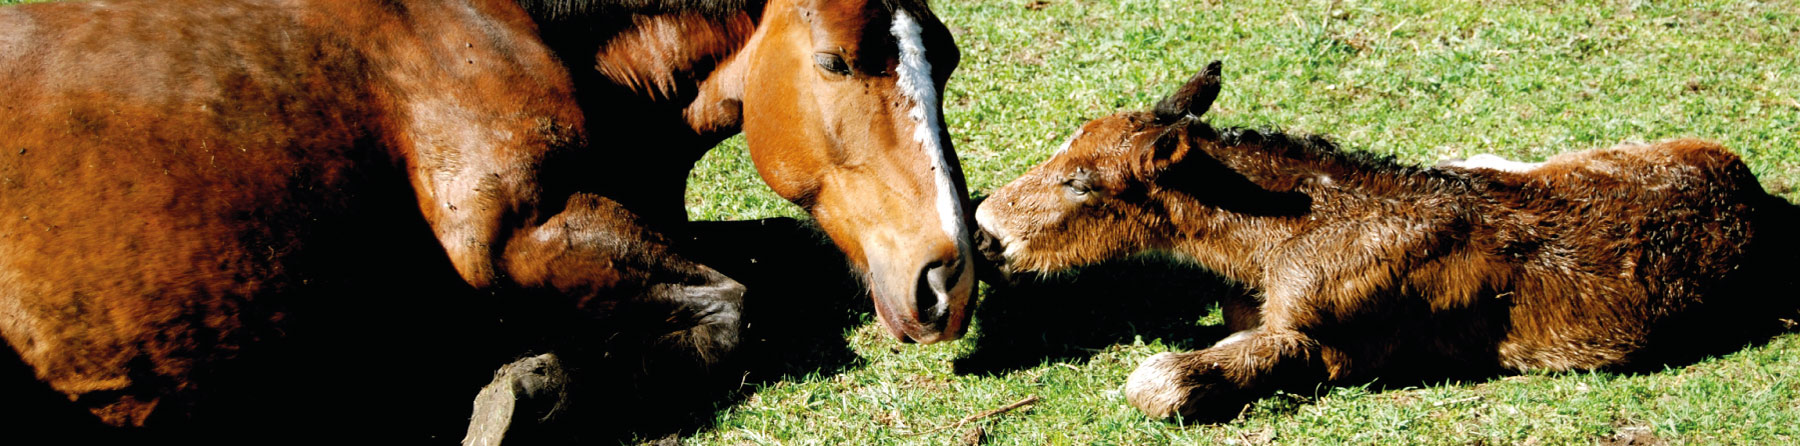 imatge on mostra una cria de cavall de poltrand